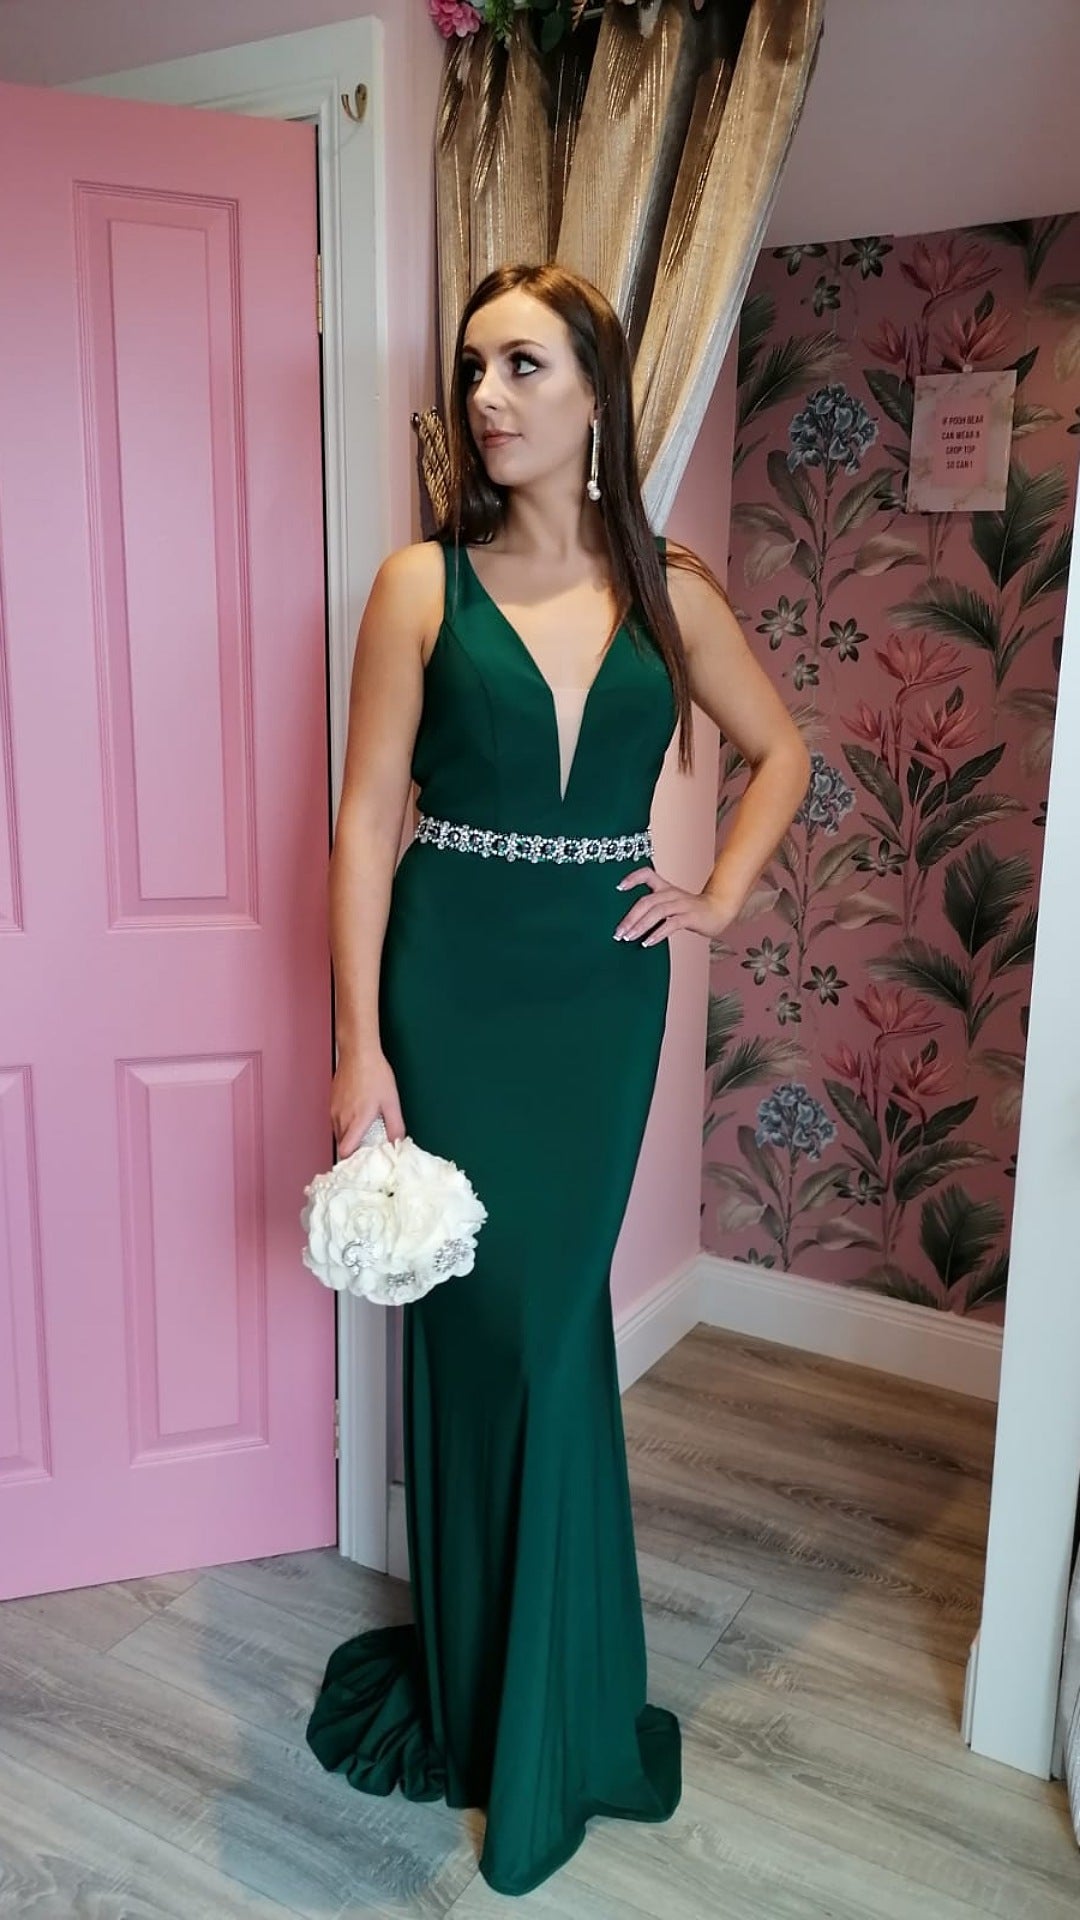 Leah Emerald Green Pearl Band Backless Bridesmaids Dress